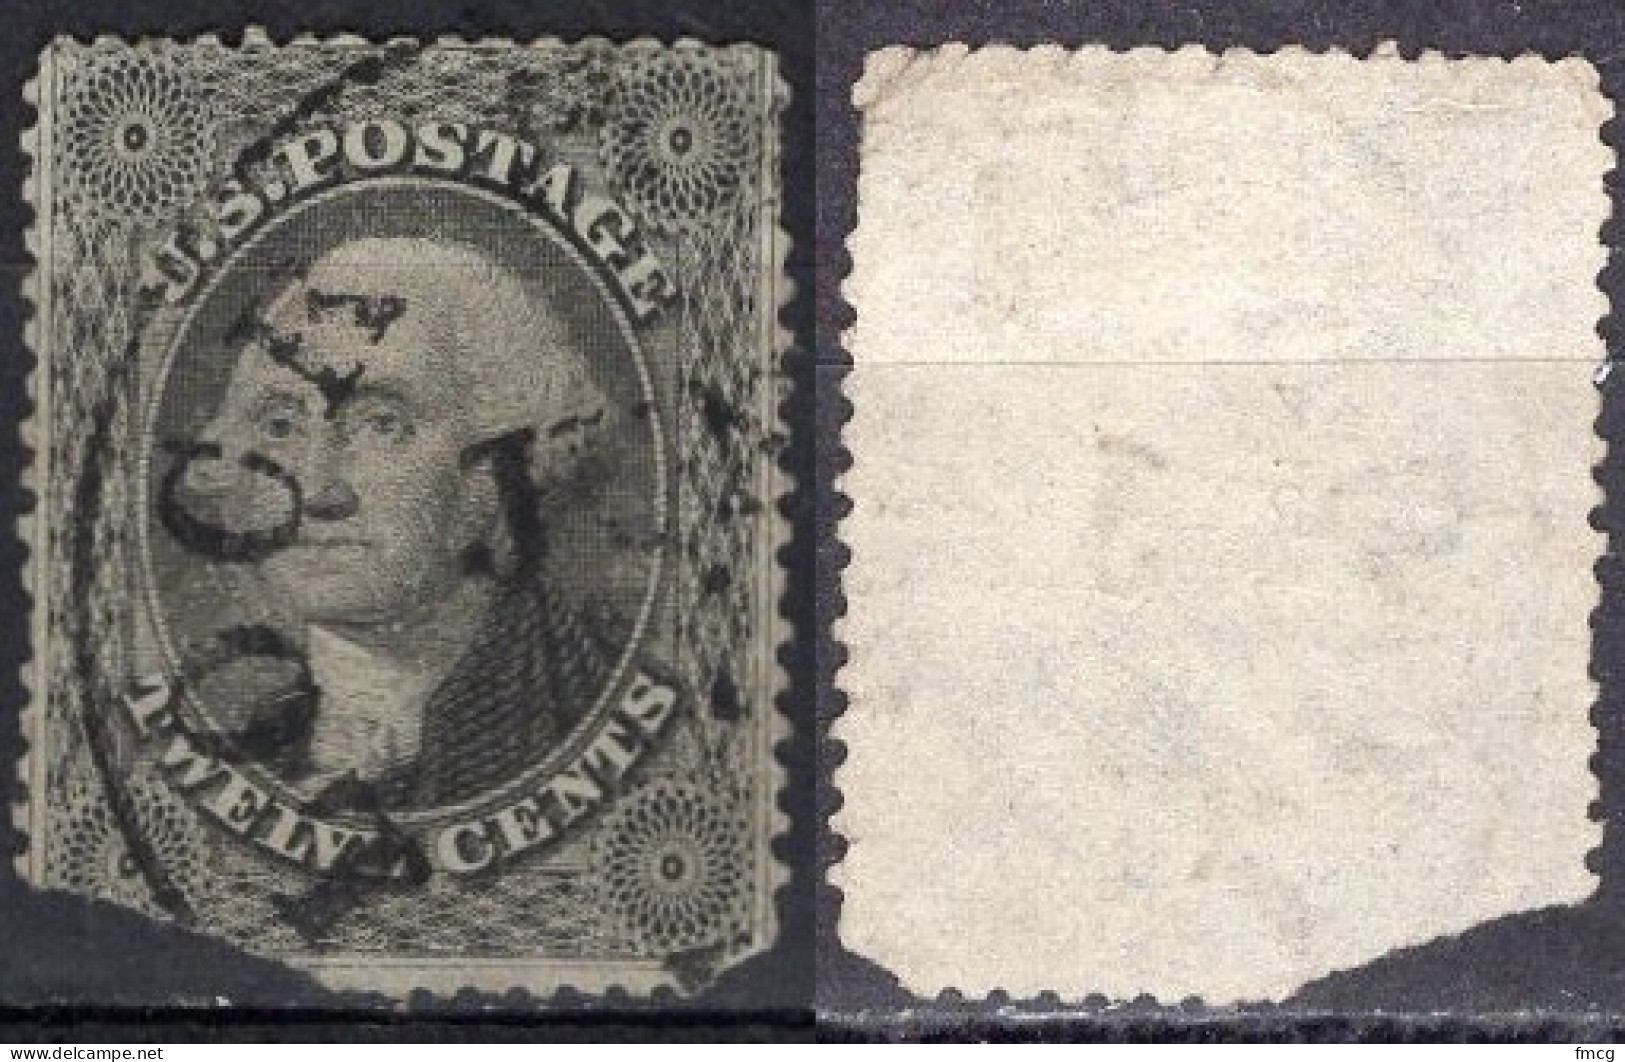 1851 12 Cents George Washington, Used, Space Filler, (Scott #17) - Gebruikt